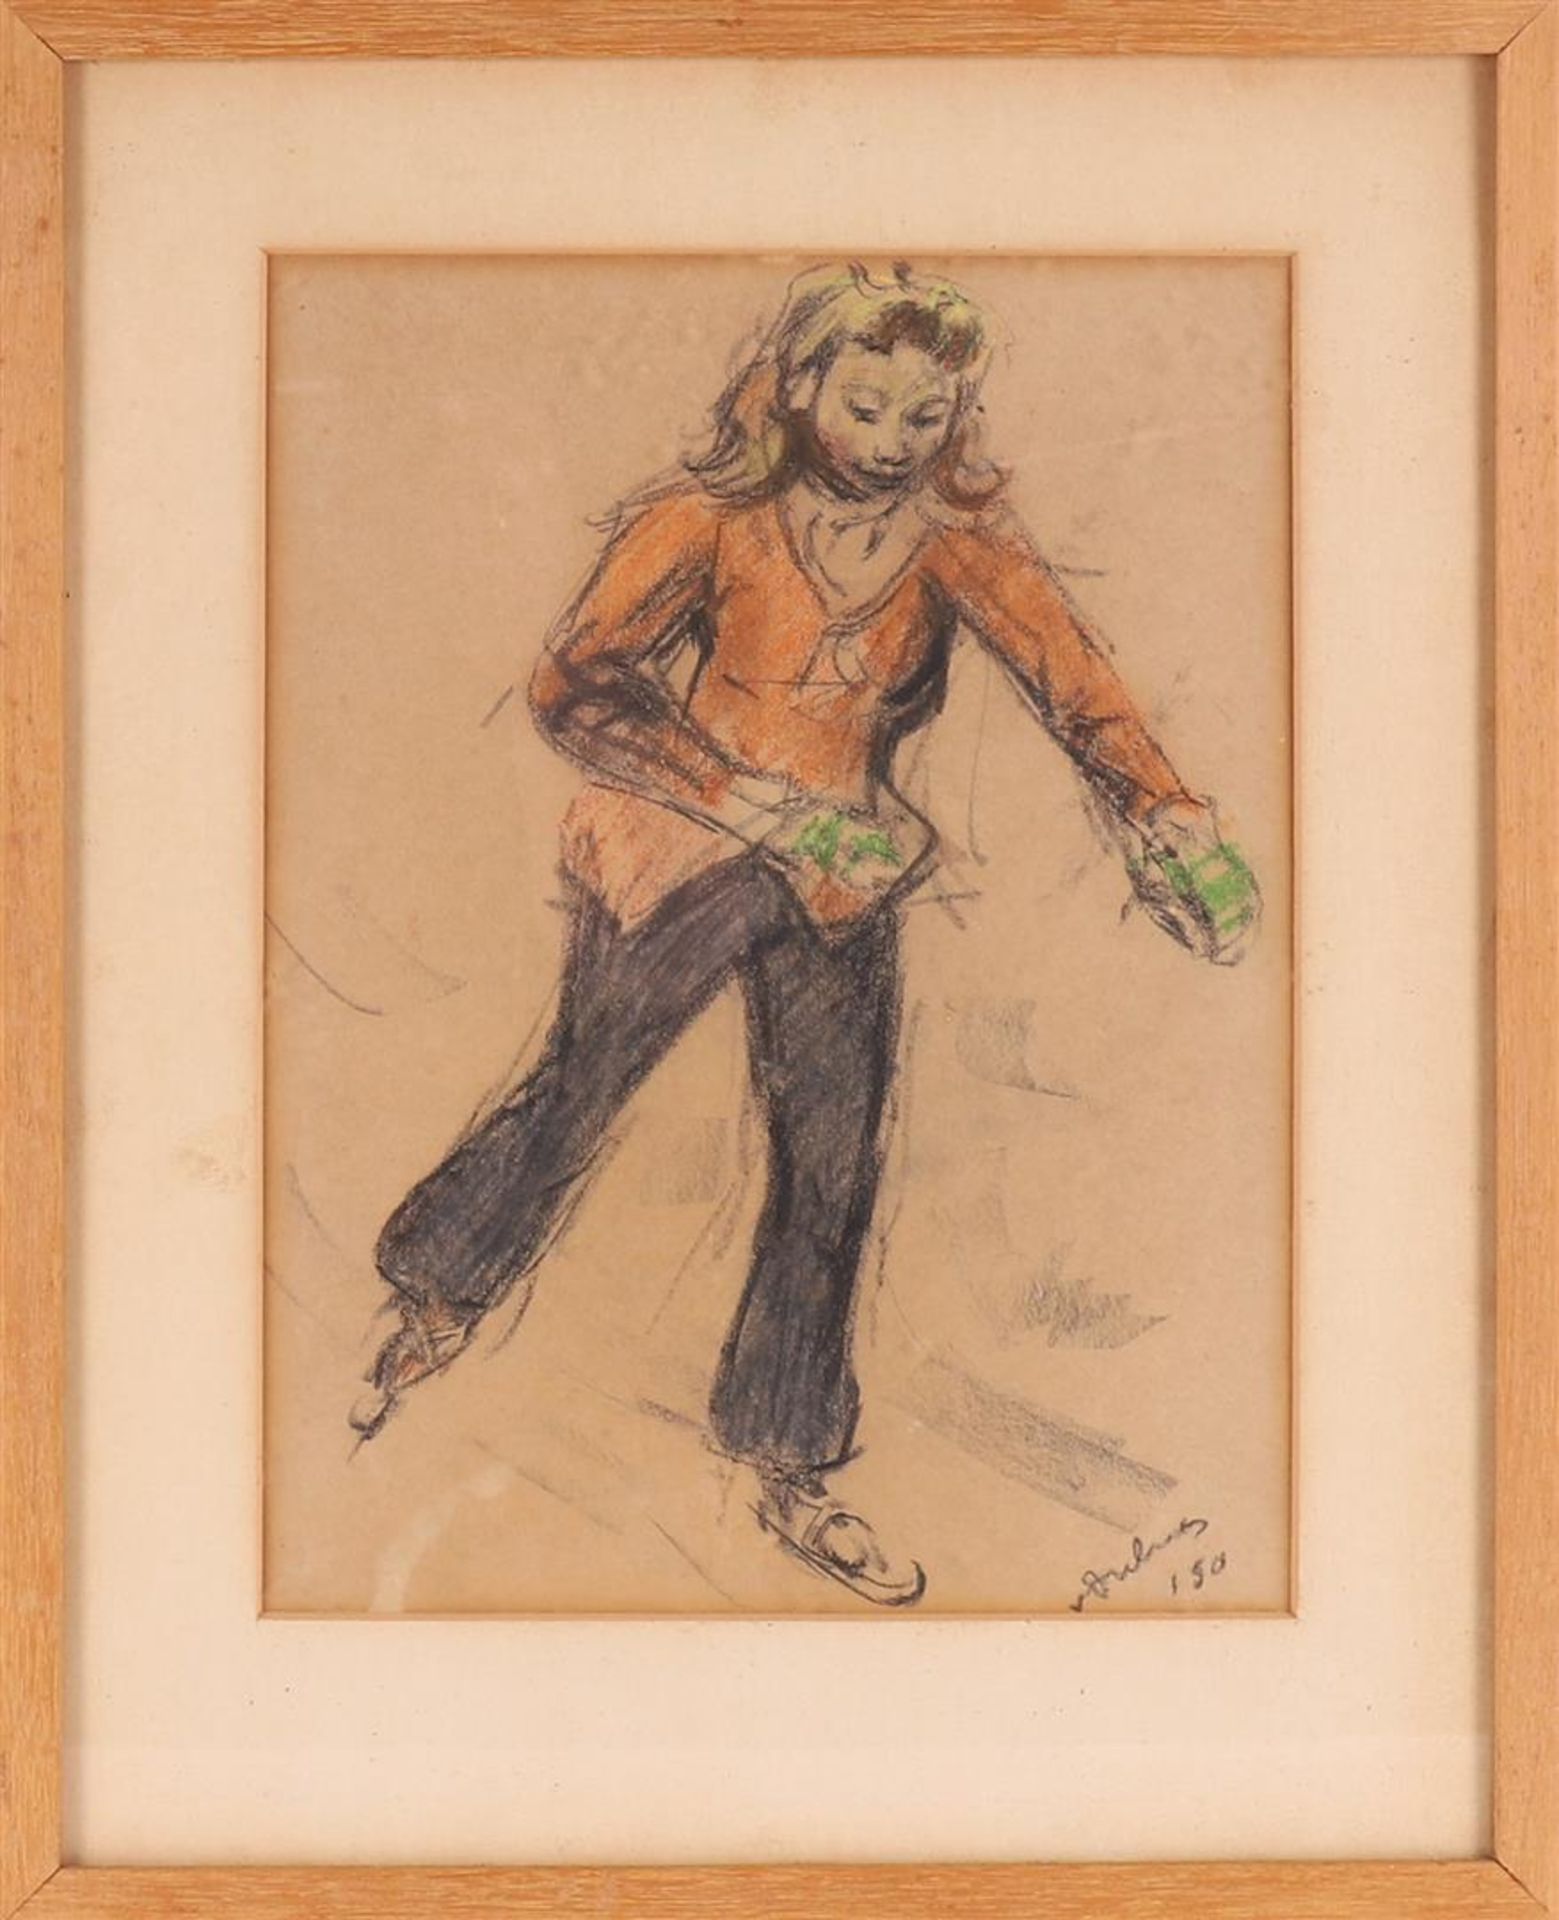 Dulmen Krumpelman van, Erasmus Bernardus sr (1897-1987) 'Ice skater',